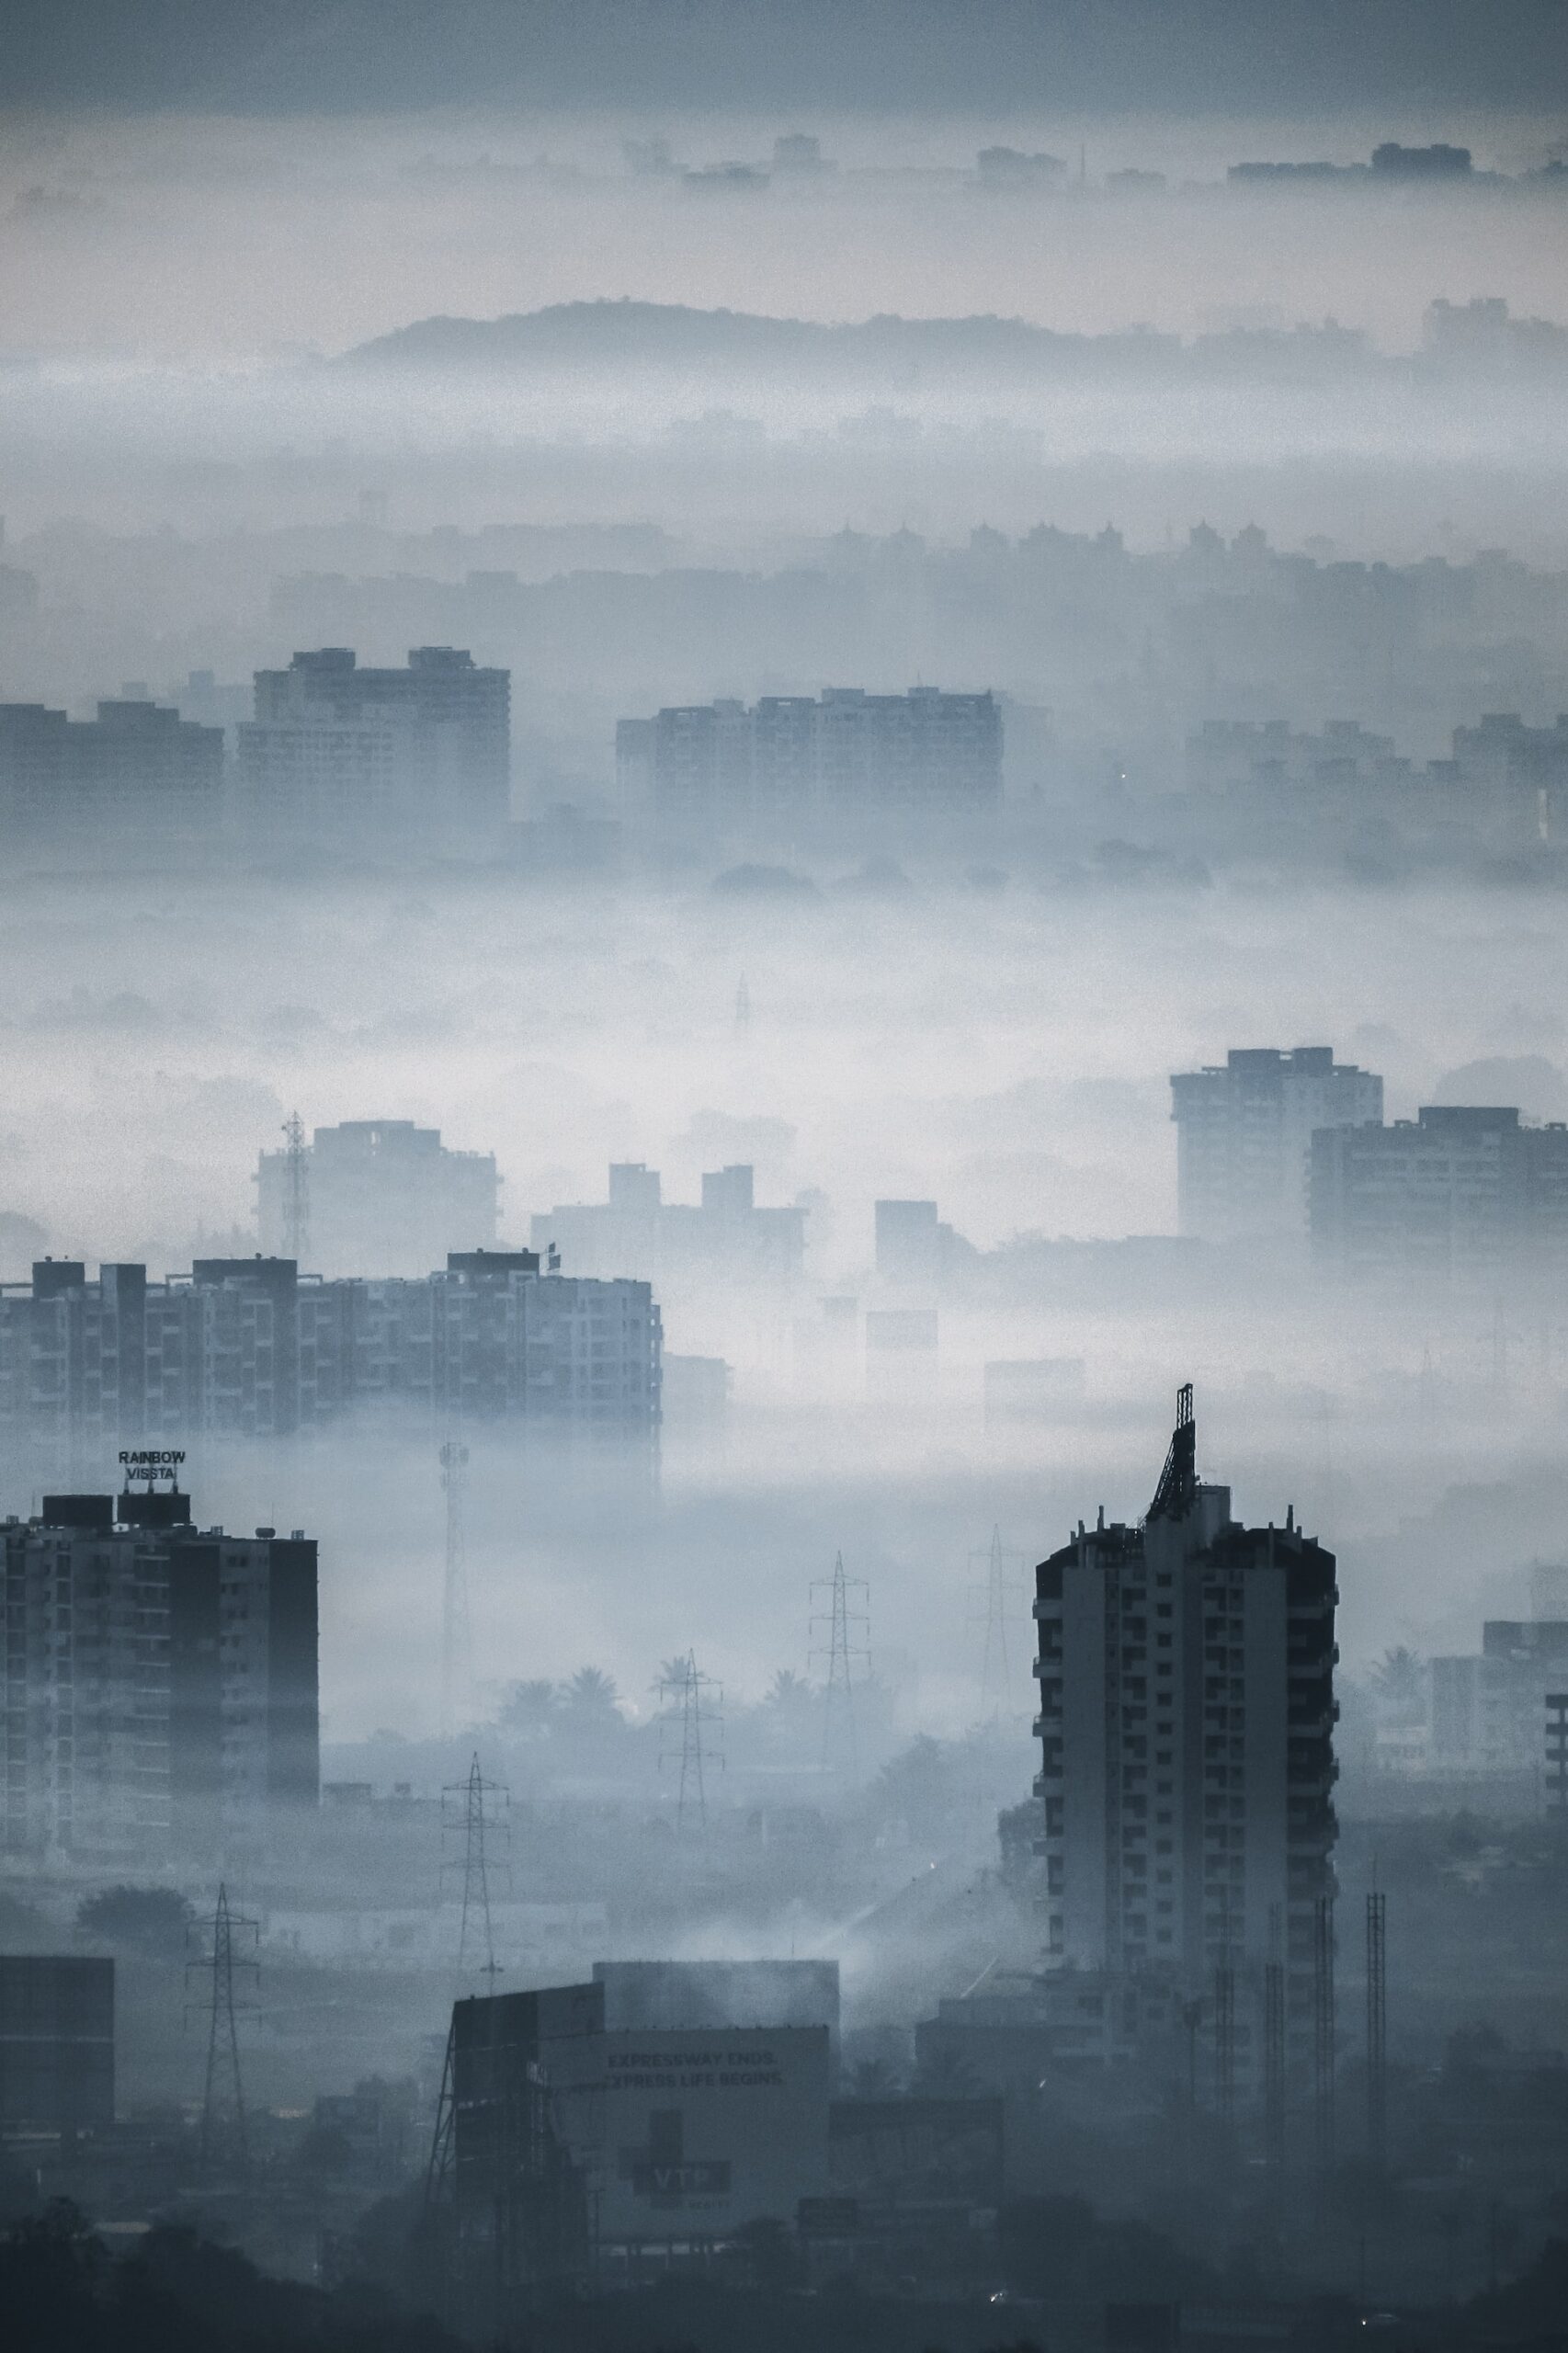 Smog in winter over buildings